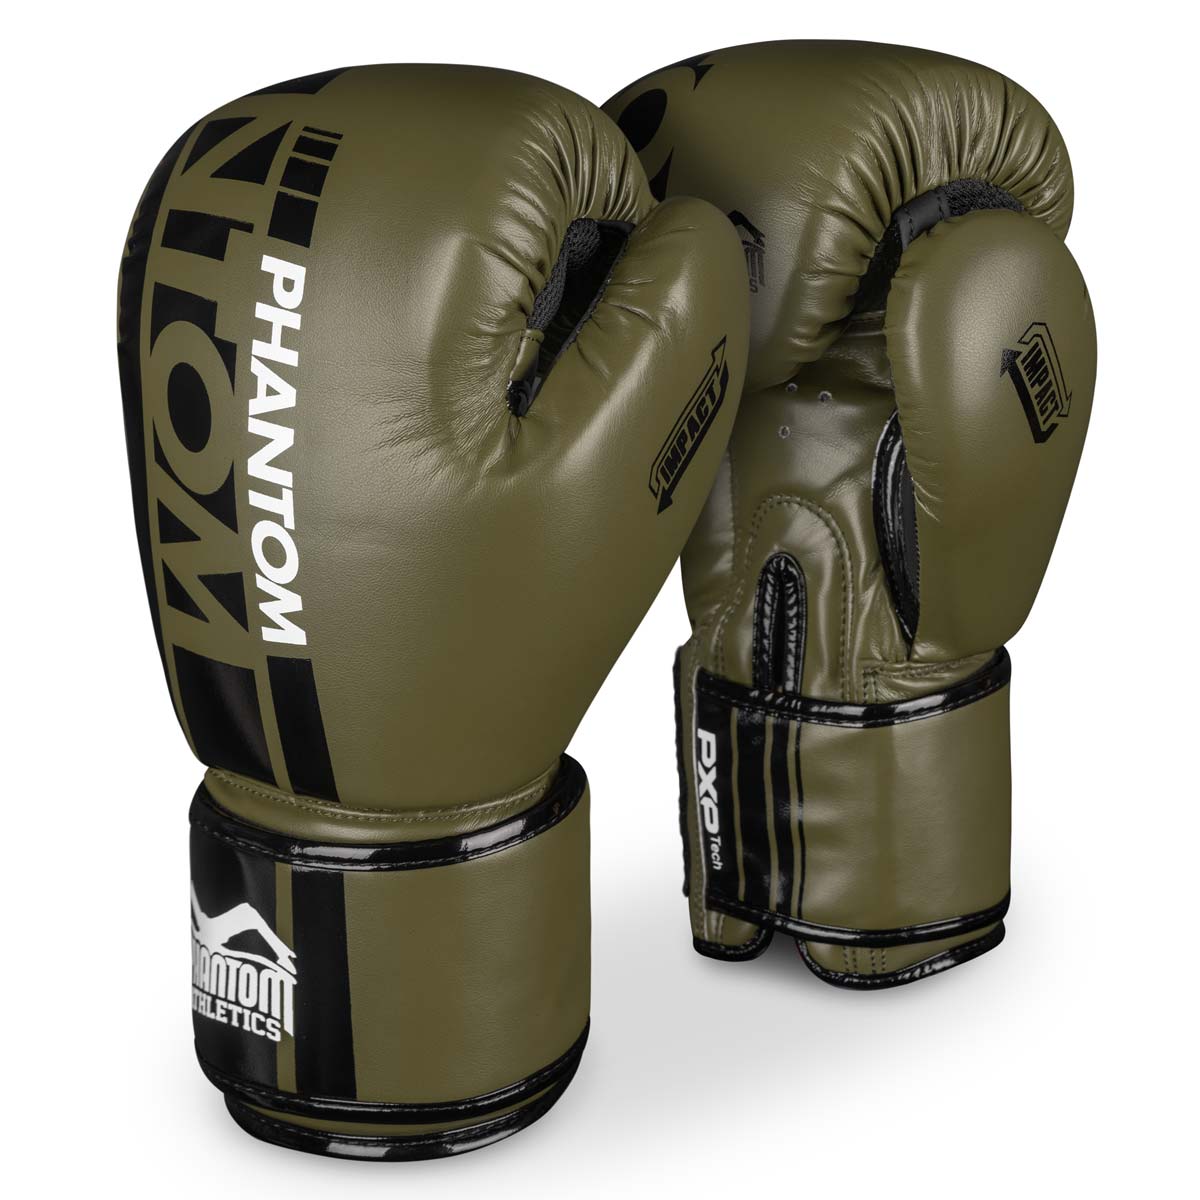 Phantom bokserske rukavice APEX Army Green za trening borilačkih vještina